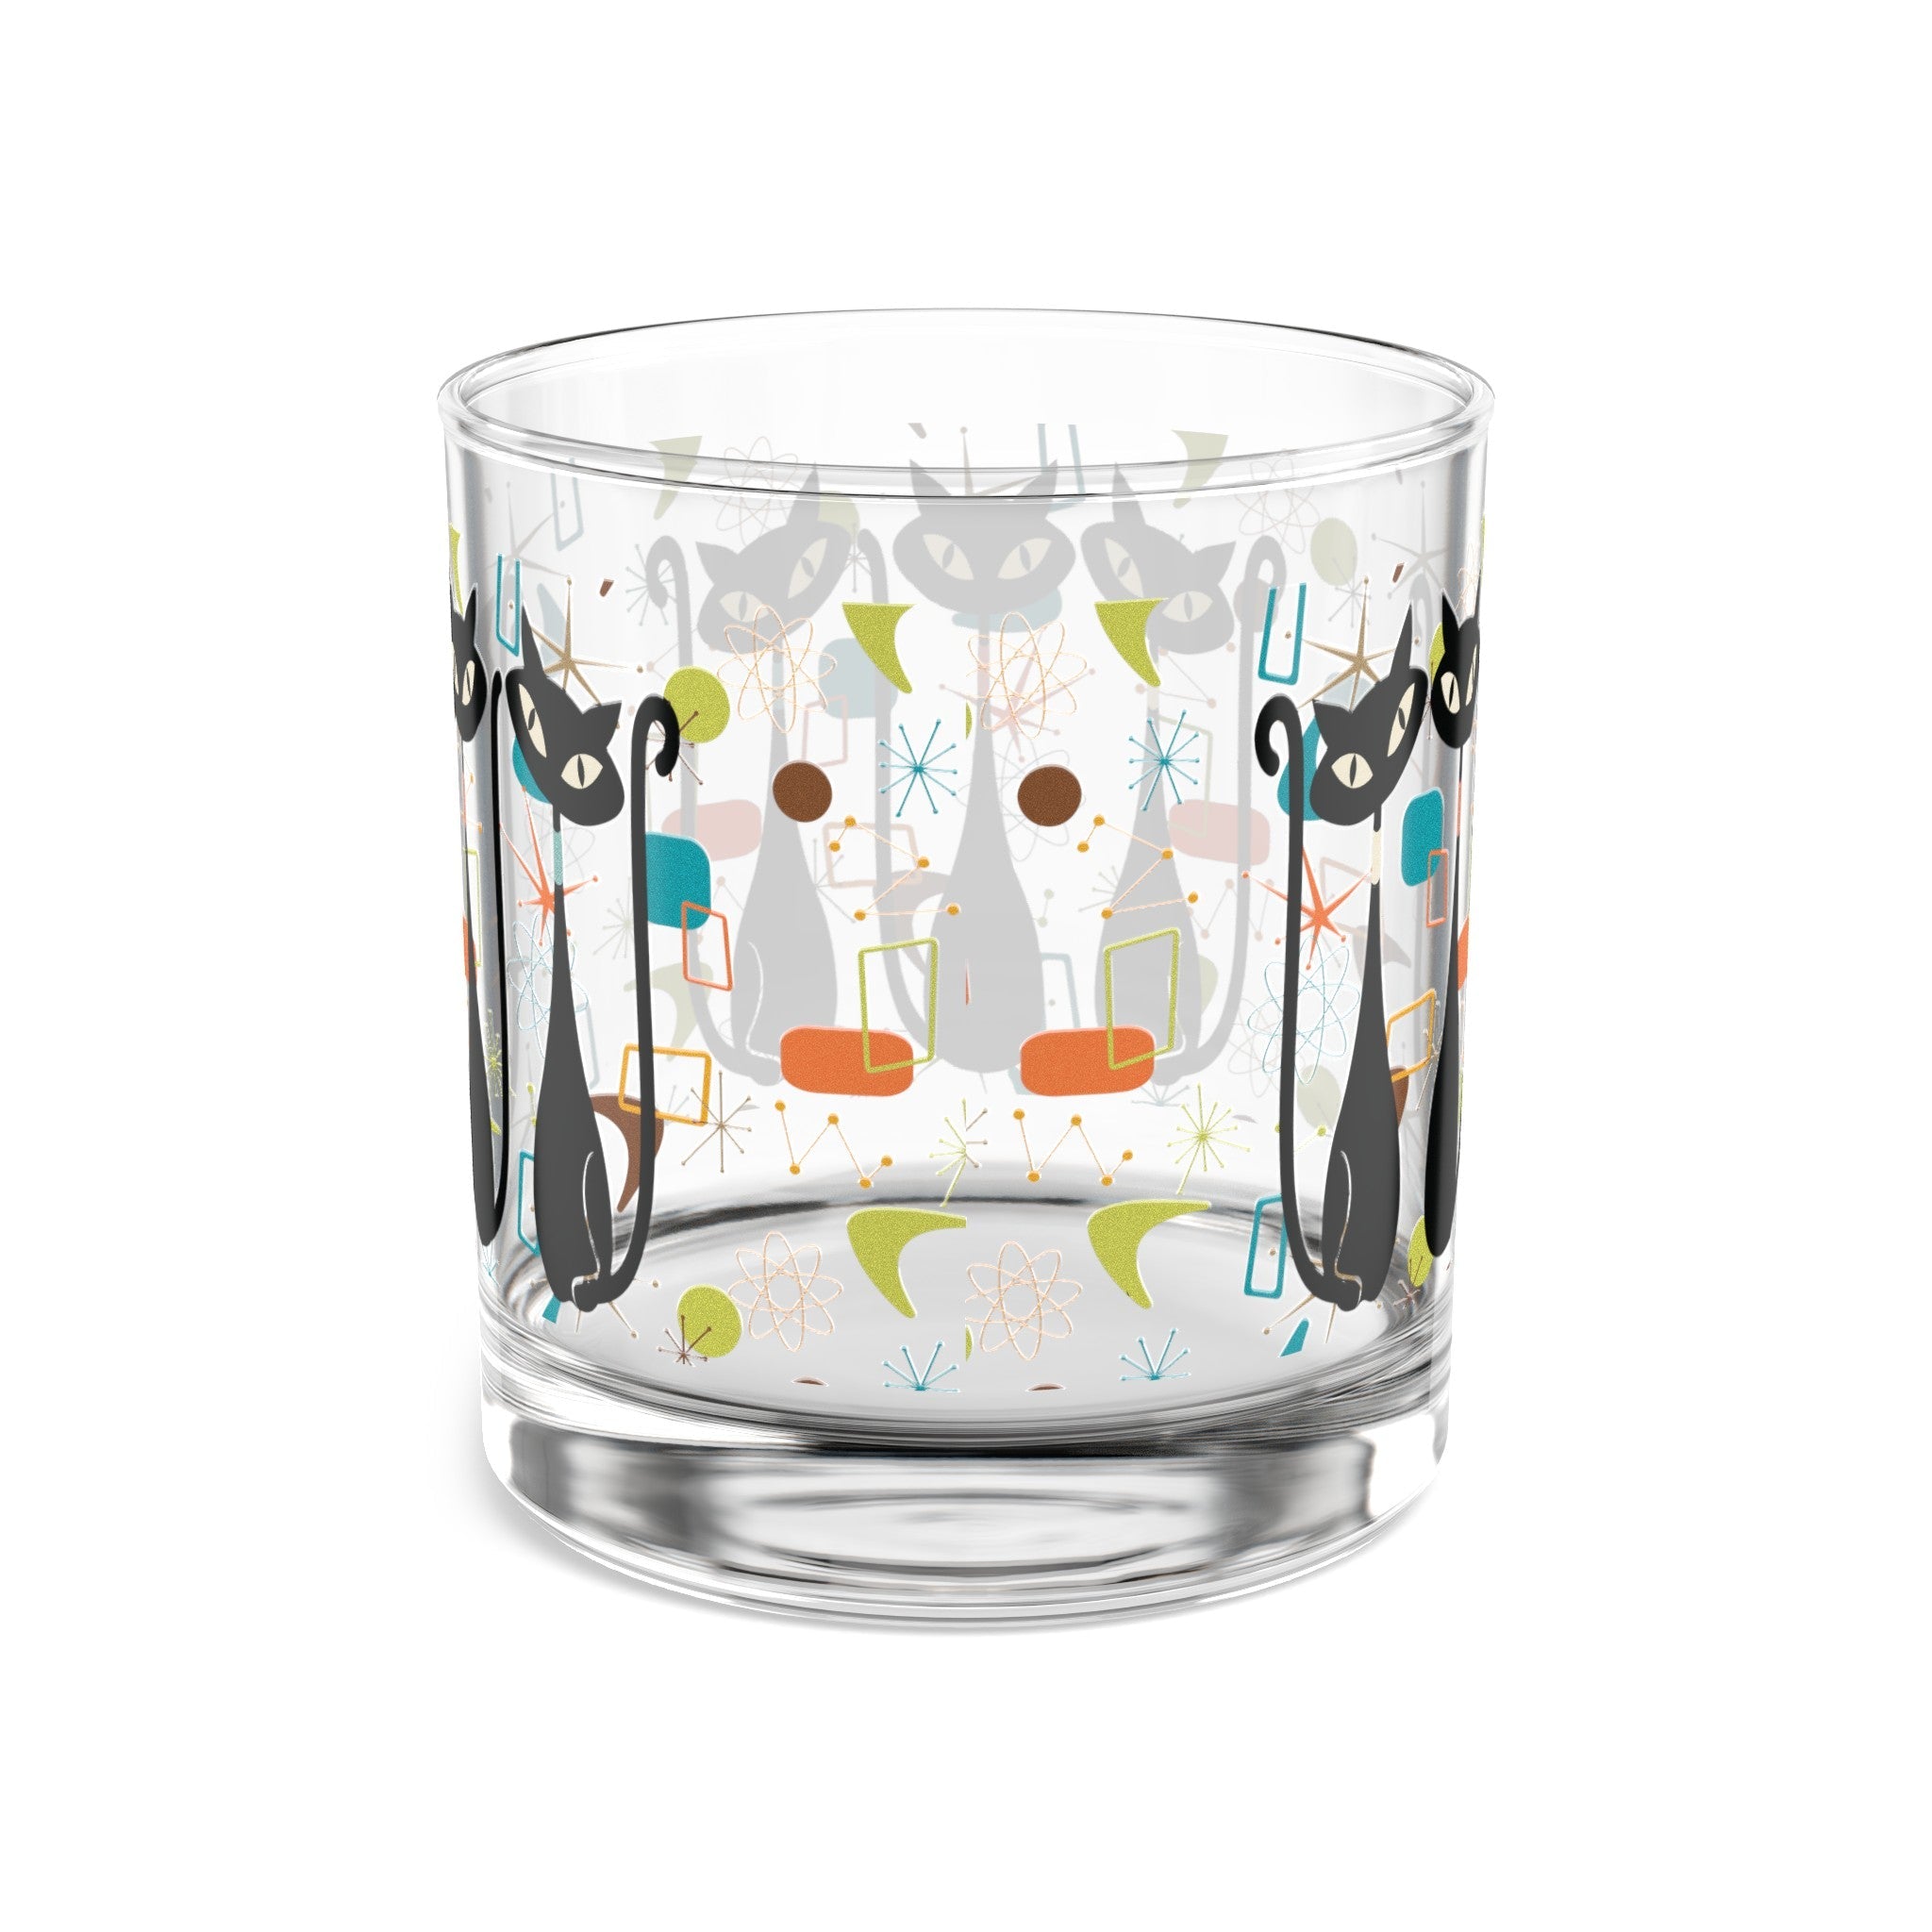 Kate McEnroe New York Atomic Kitschy Black Cat Rocks Glass, 10oz Mid Century Modern Whiskey Glass, Retro Lowball Cocktail Glass, 1950s Vintage Style BarwareCocktail Glasses17503756330485255986